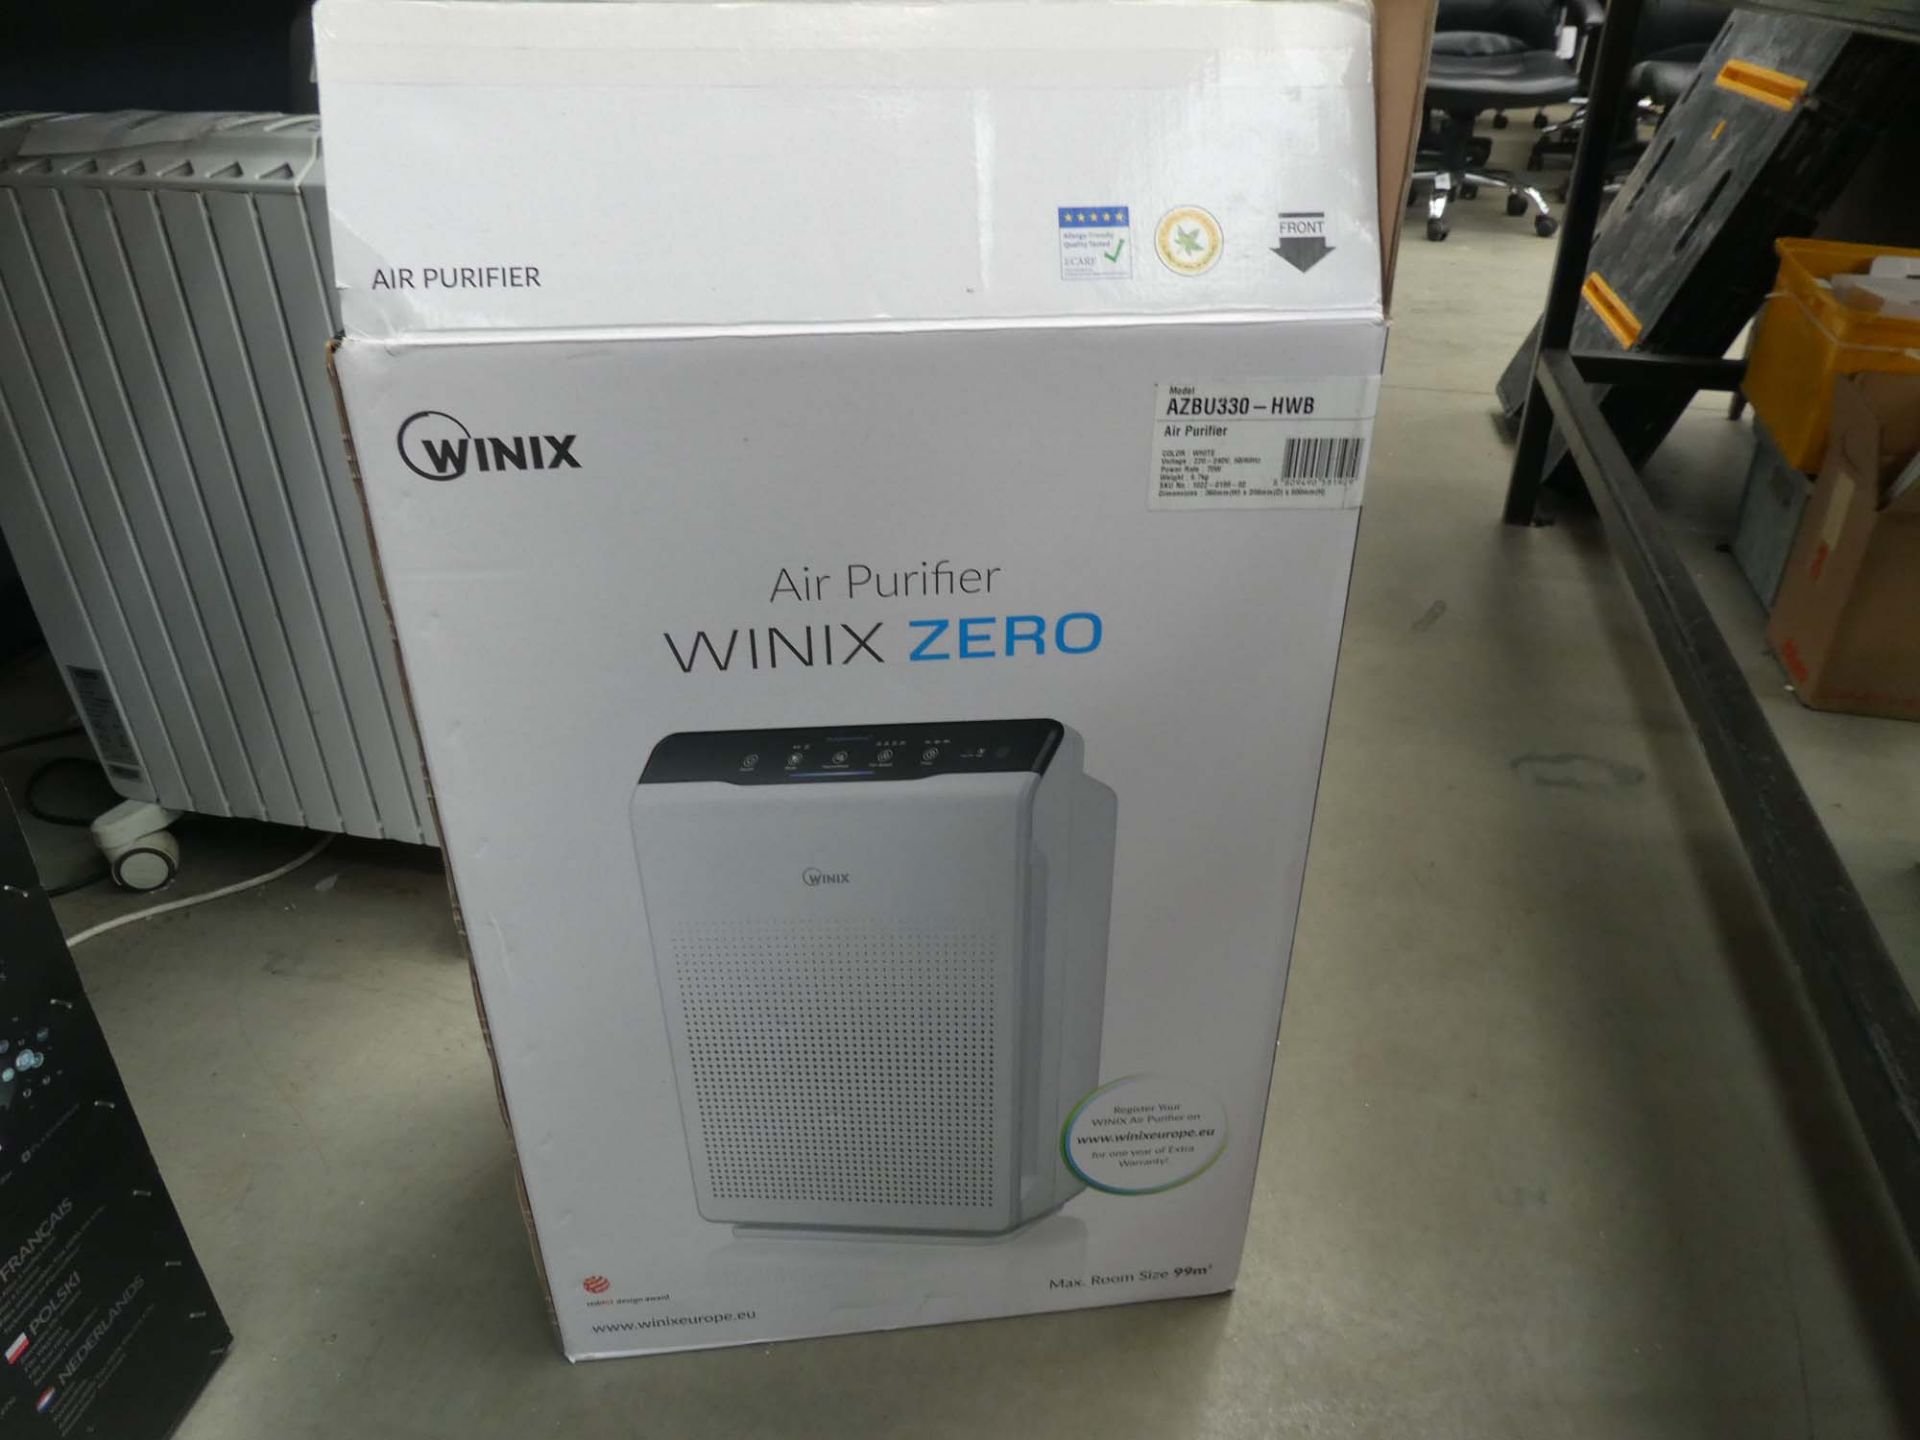 Winix boxed air purifier